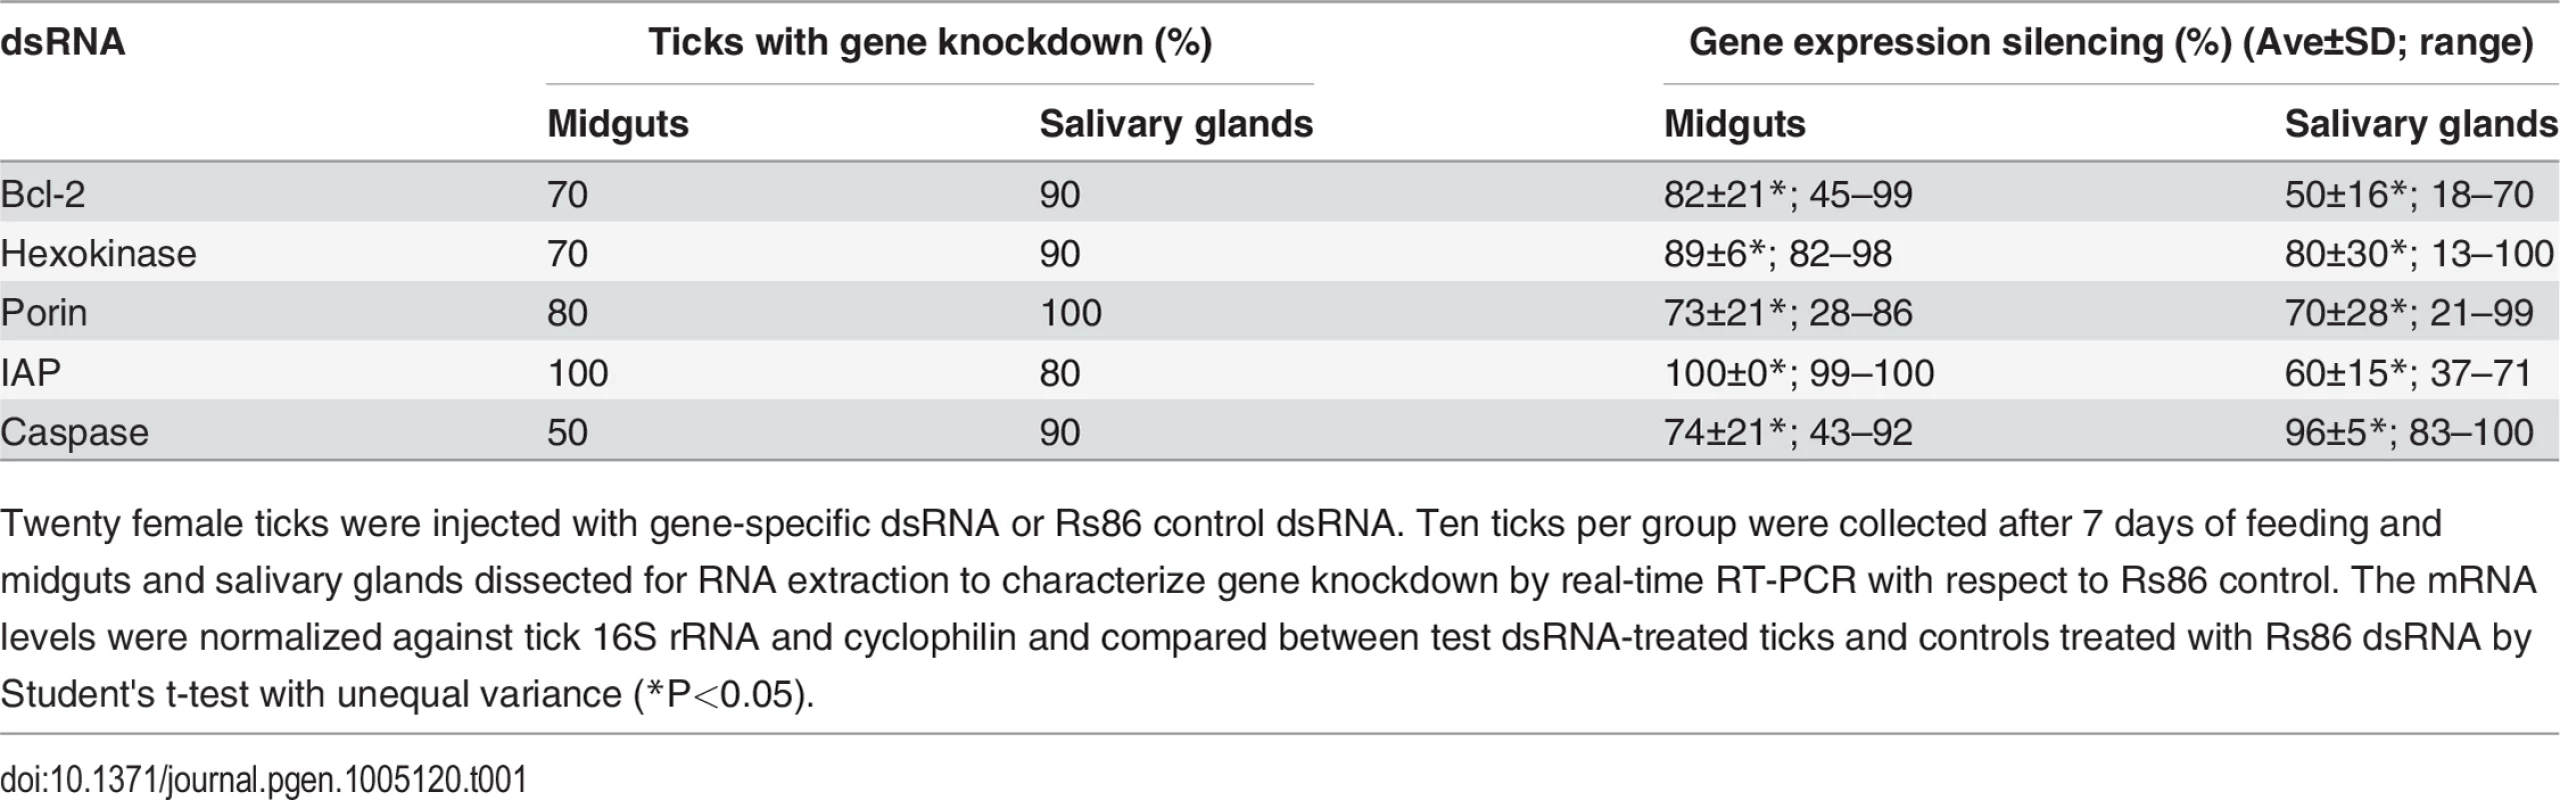 Gene knockdown in tick midguts and salivary glands.